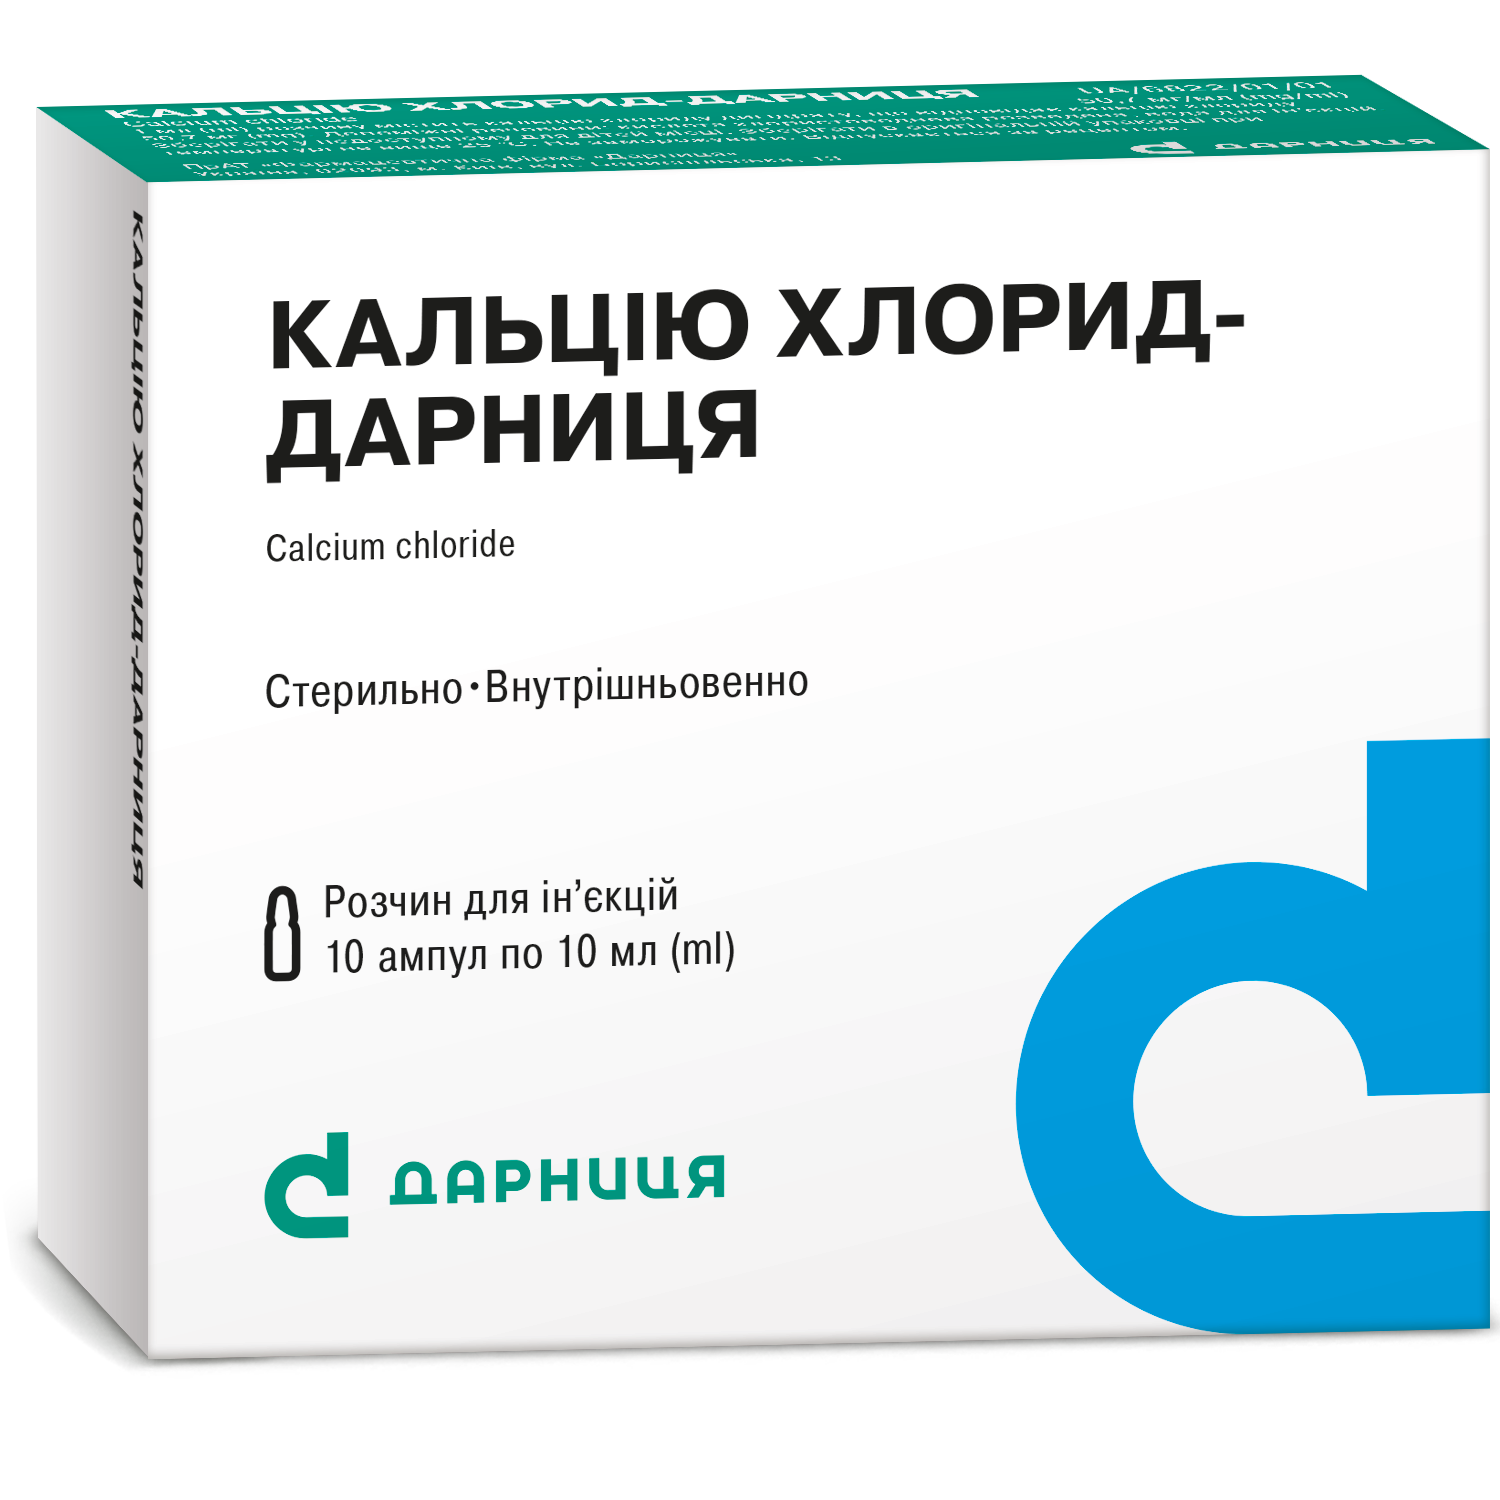 Calcium chloride-Darnitsa